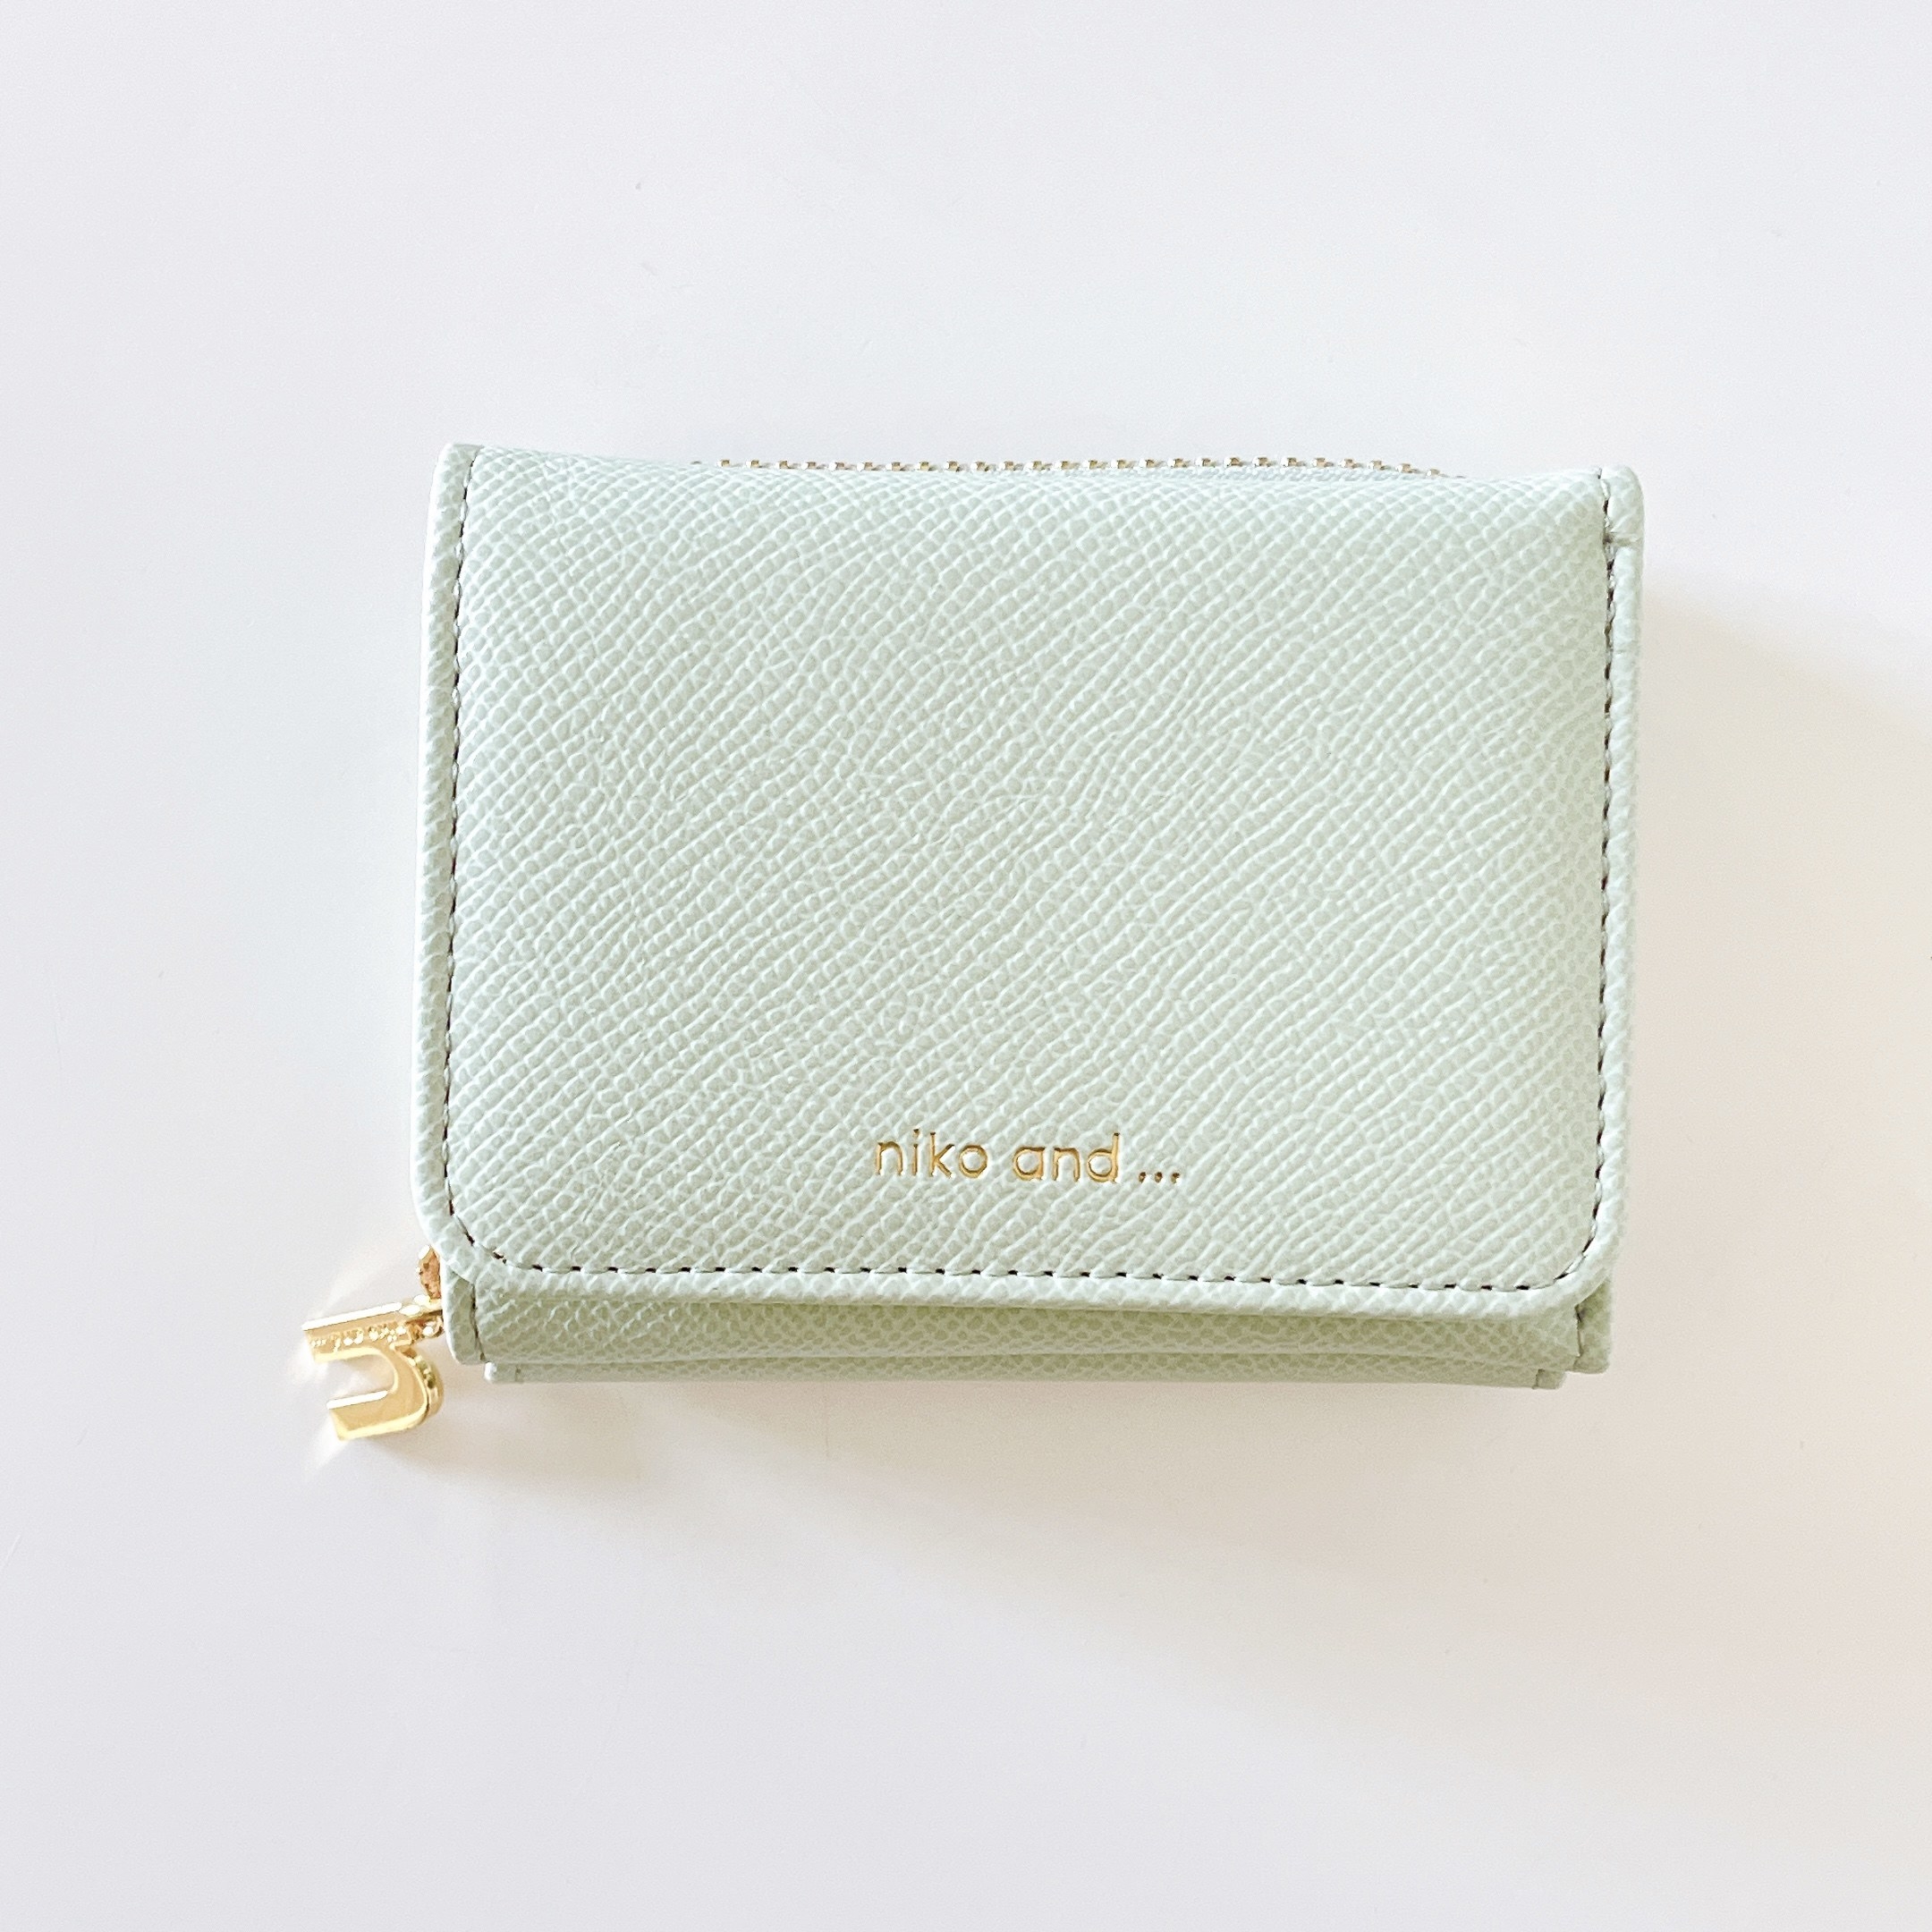 niko and…（ニコ アンド）のおすすめの財布「オリジナルロゴ三つ折りミニ財布」